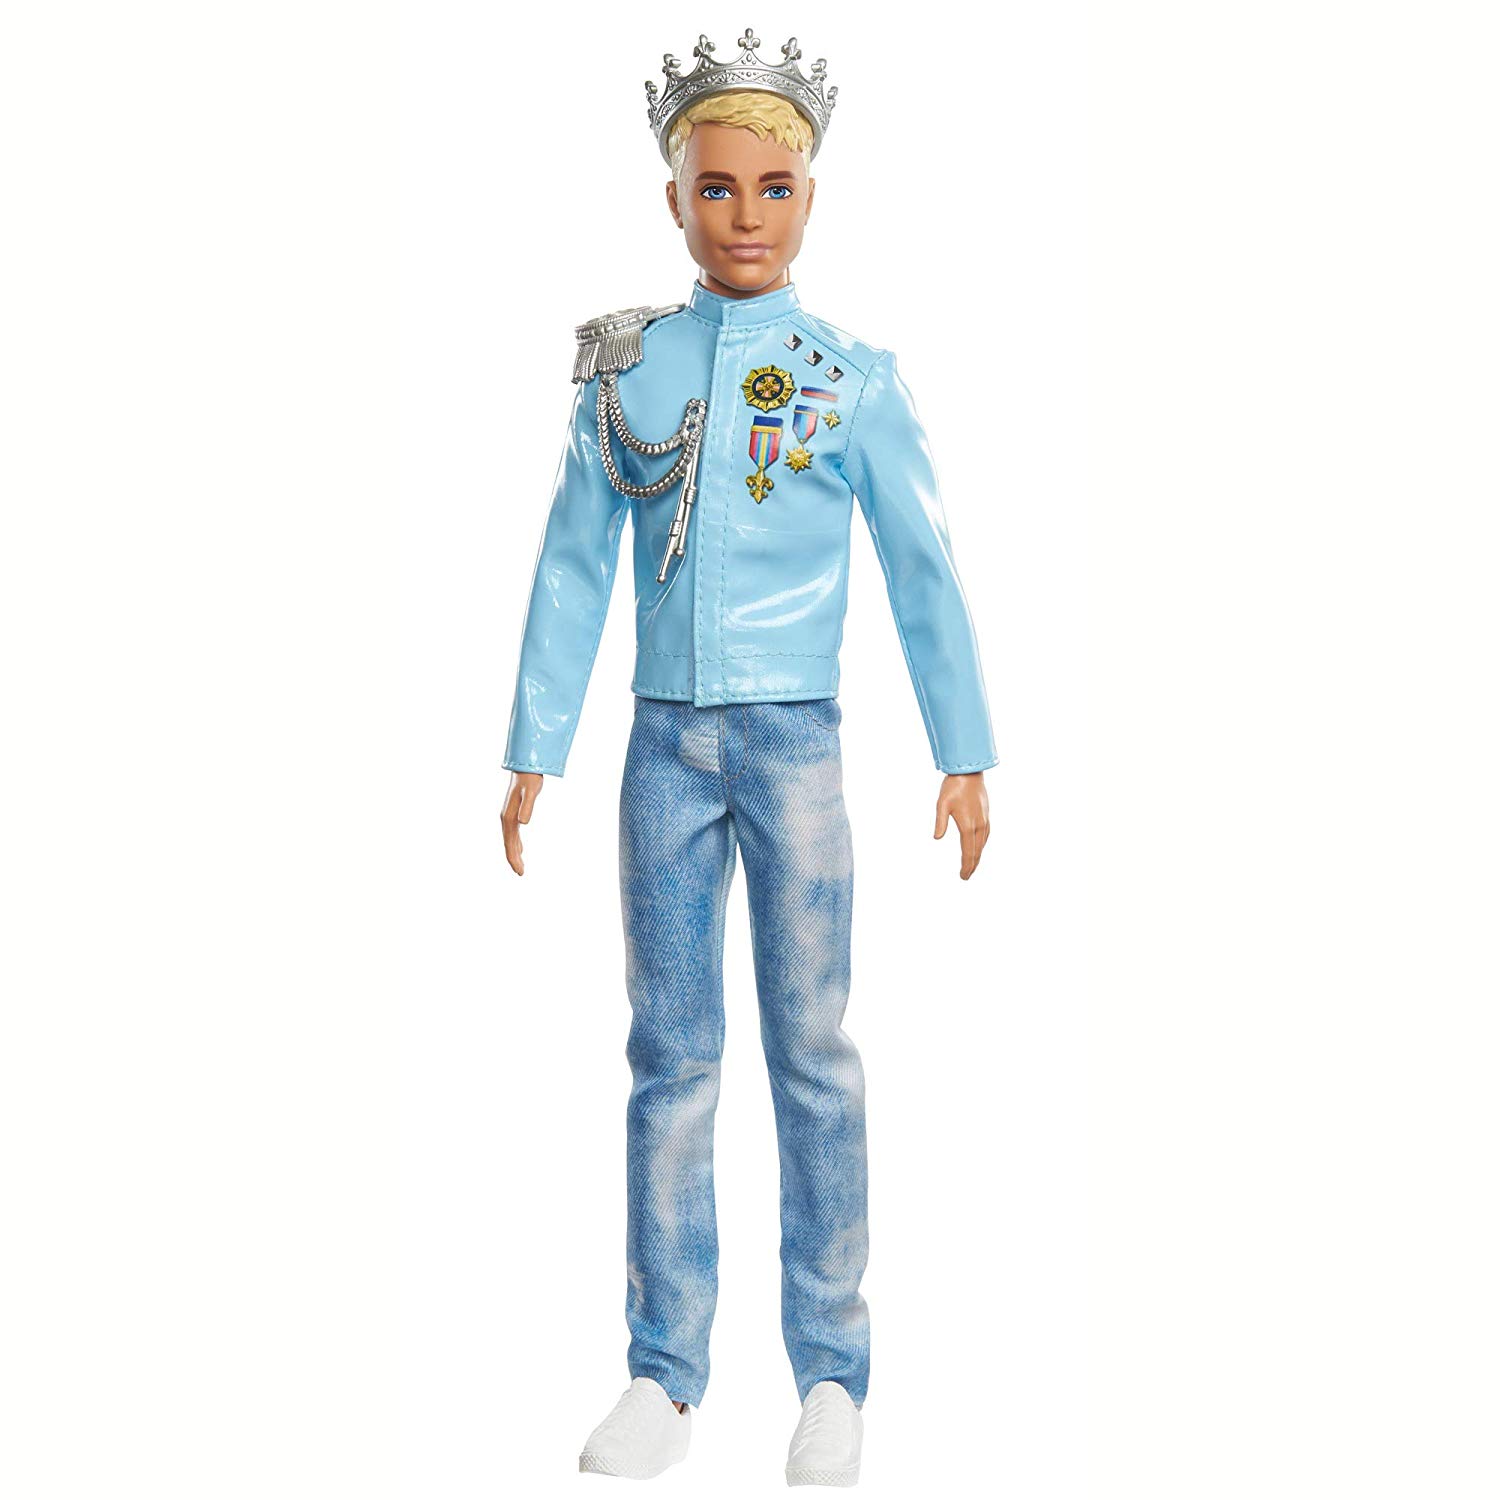 Barbie Princess Adventure Ken Prince doll - YouLoveIt.com